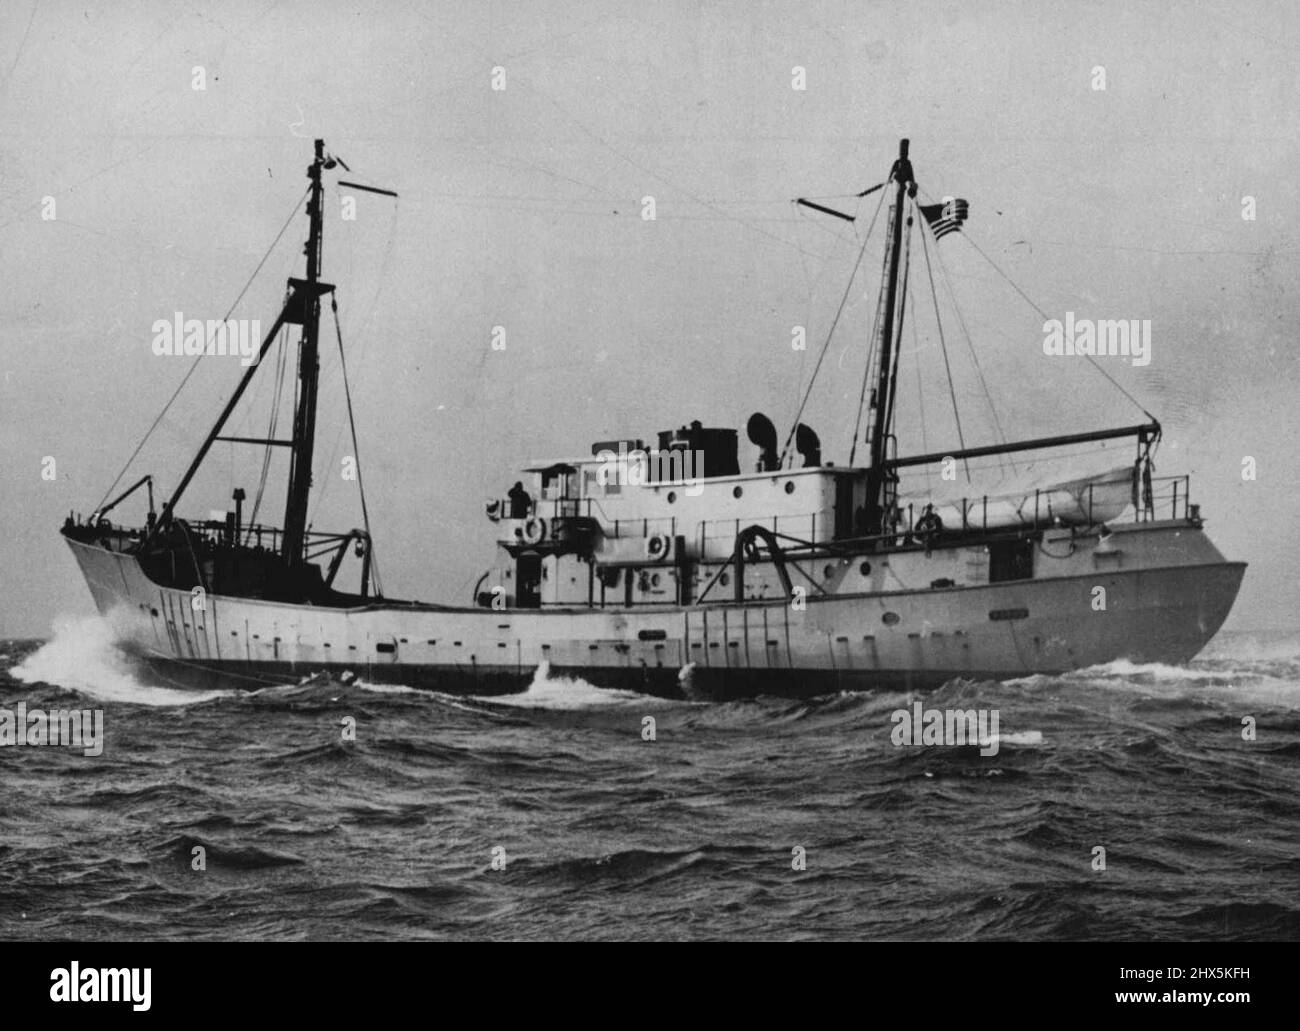 6,613 Old Trawler Stock Photos - Free & Royalty-Free Stock Photos